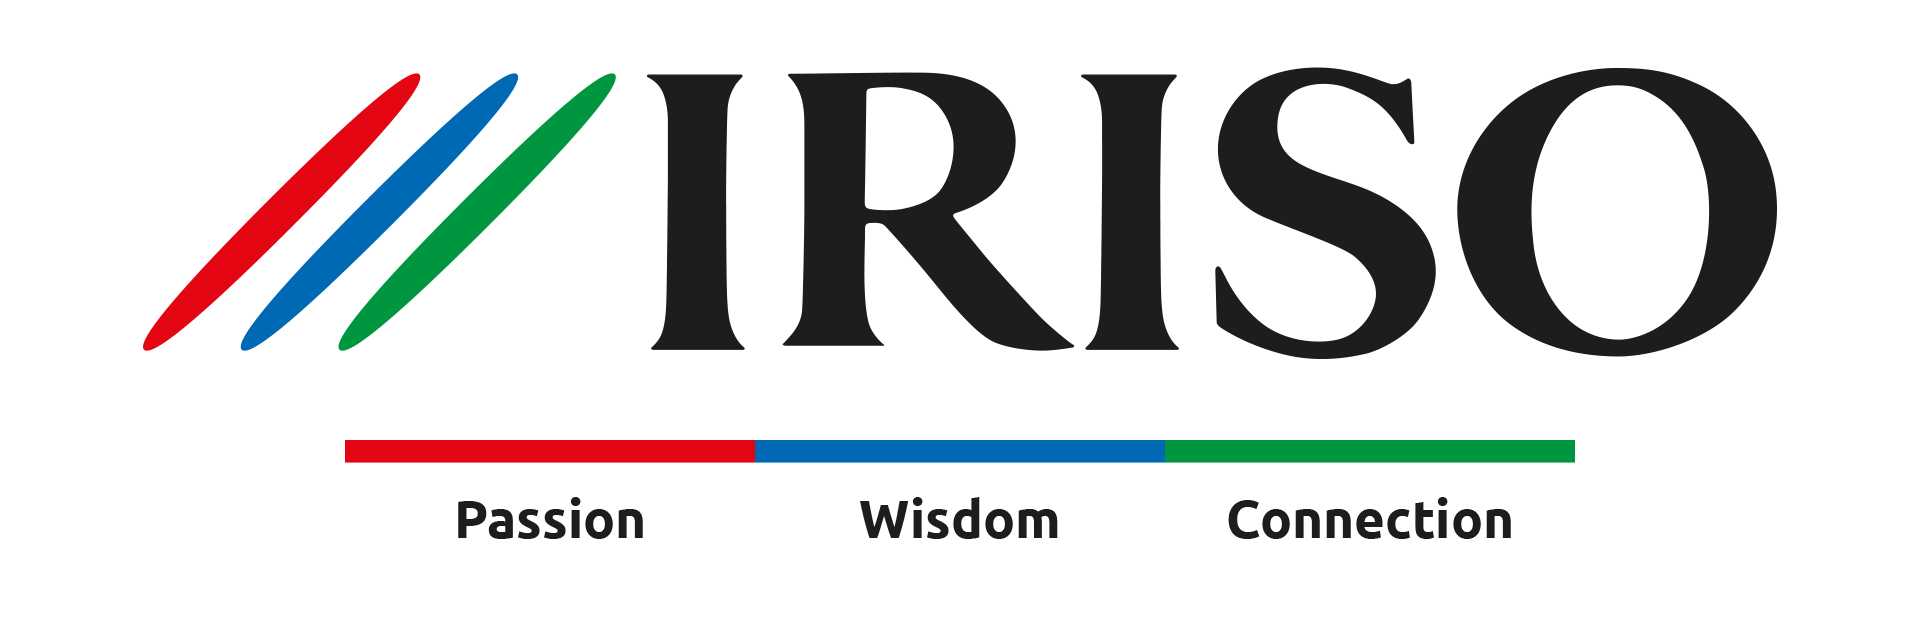 Iriso Electronics - Philosophy & Values